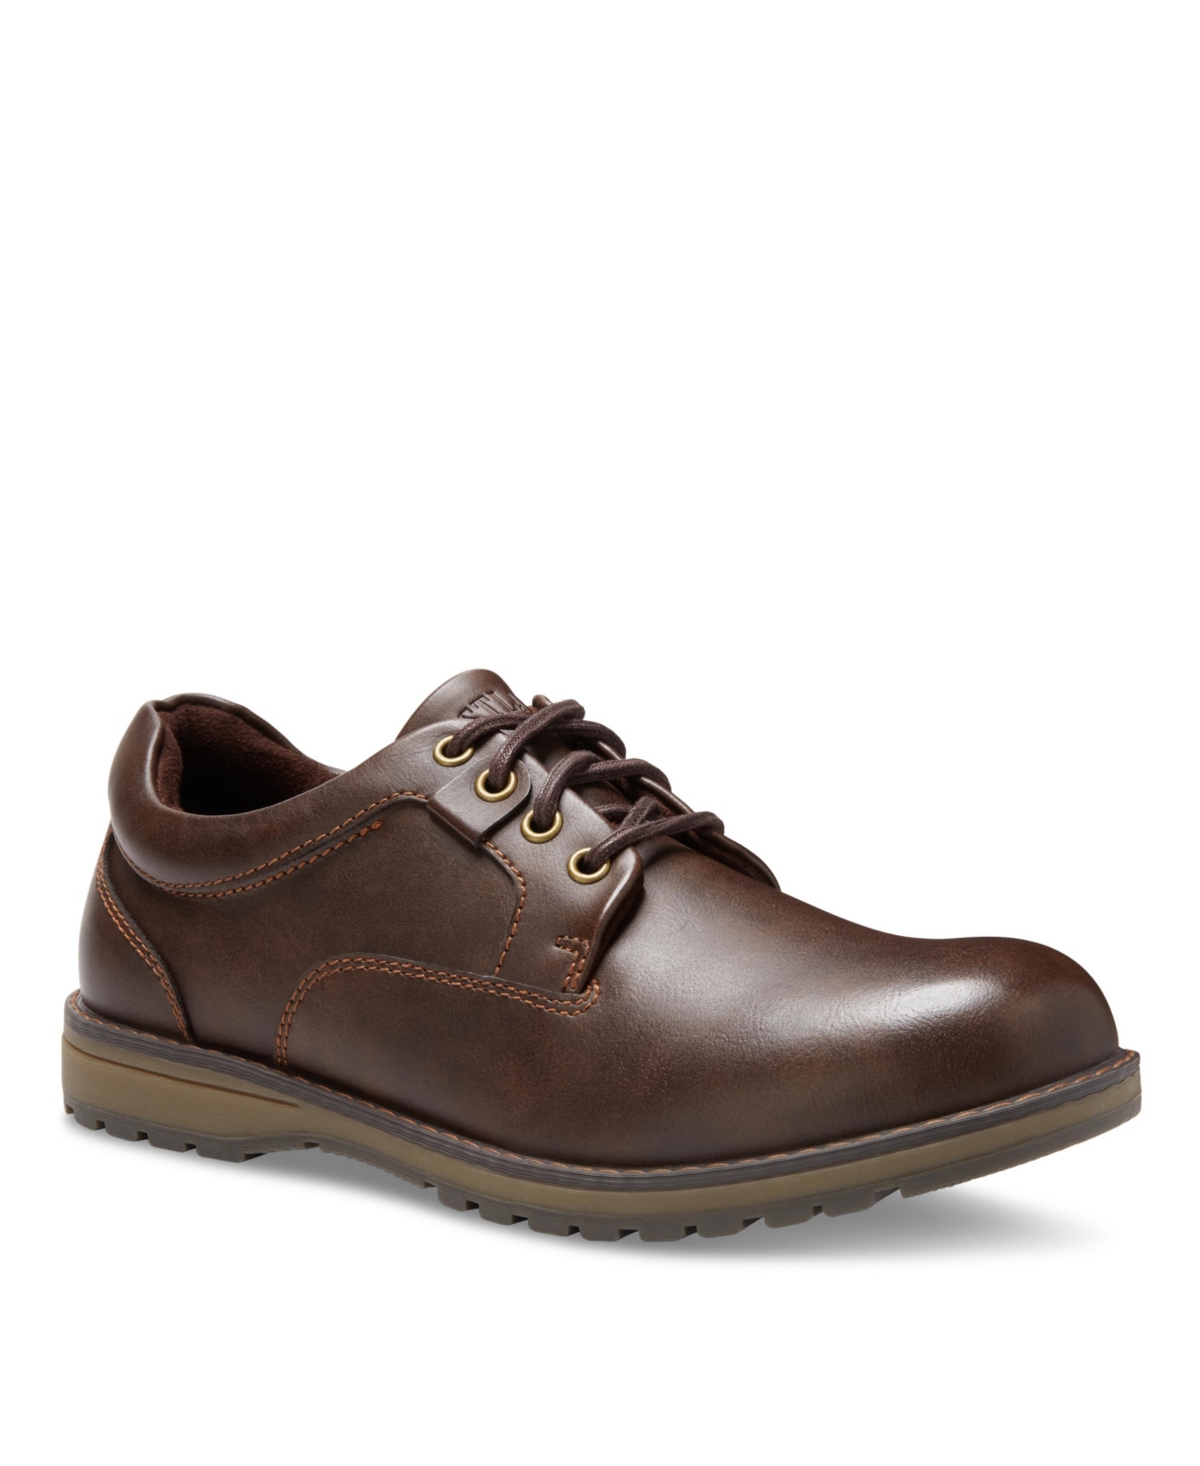 Men's Dante Oxford Shoes - Brown